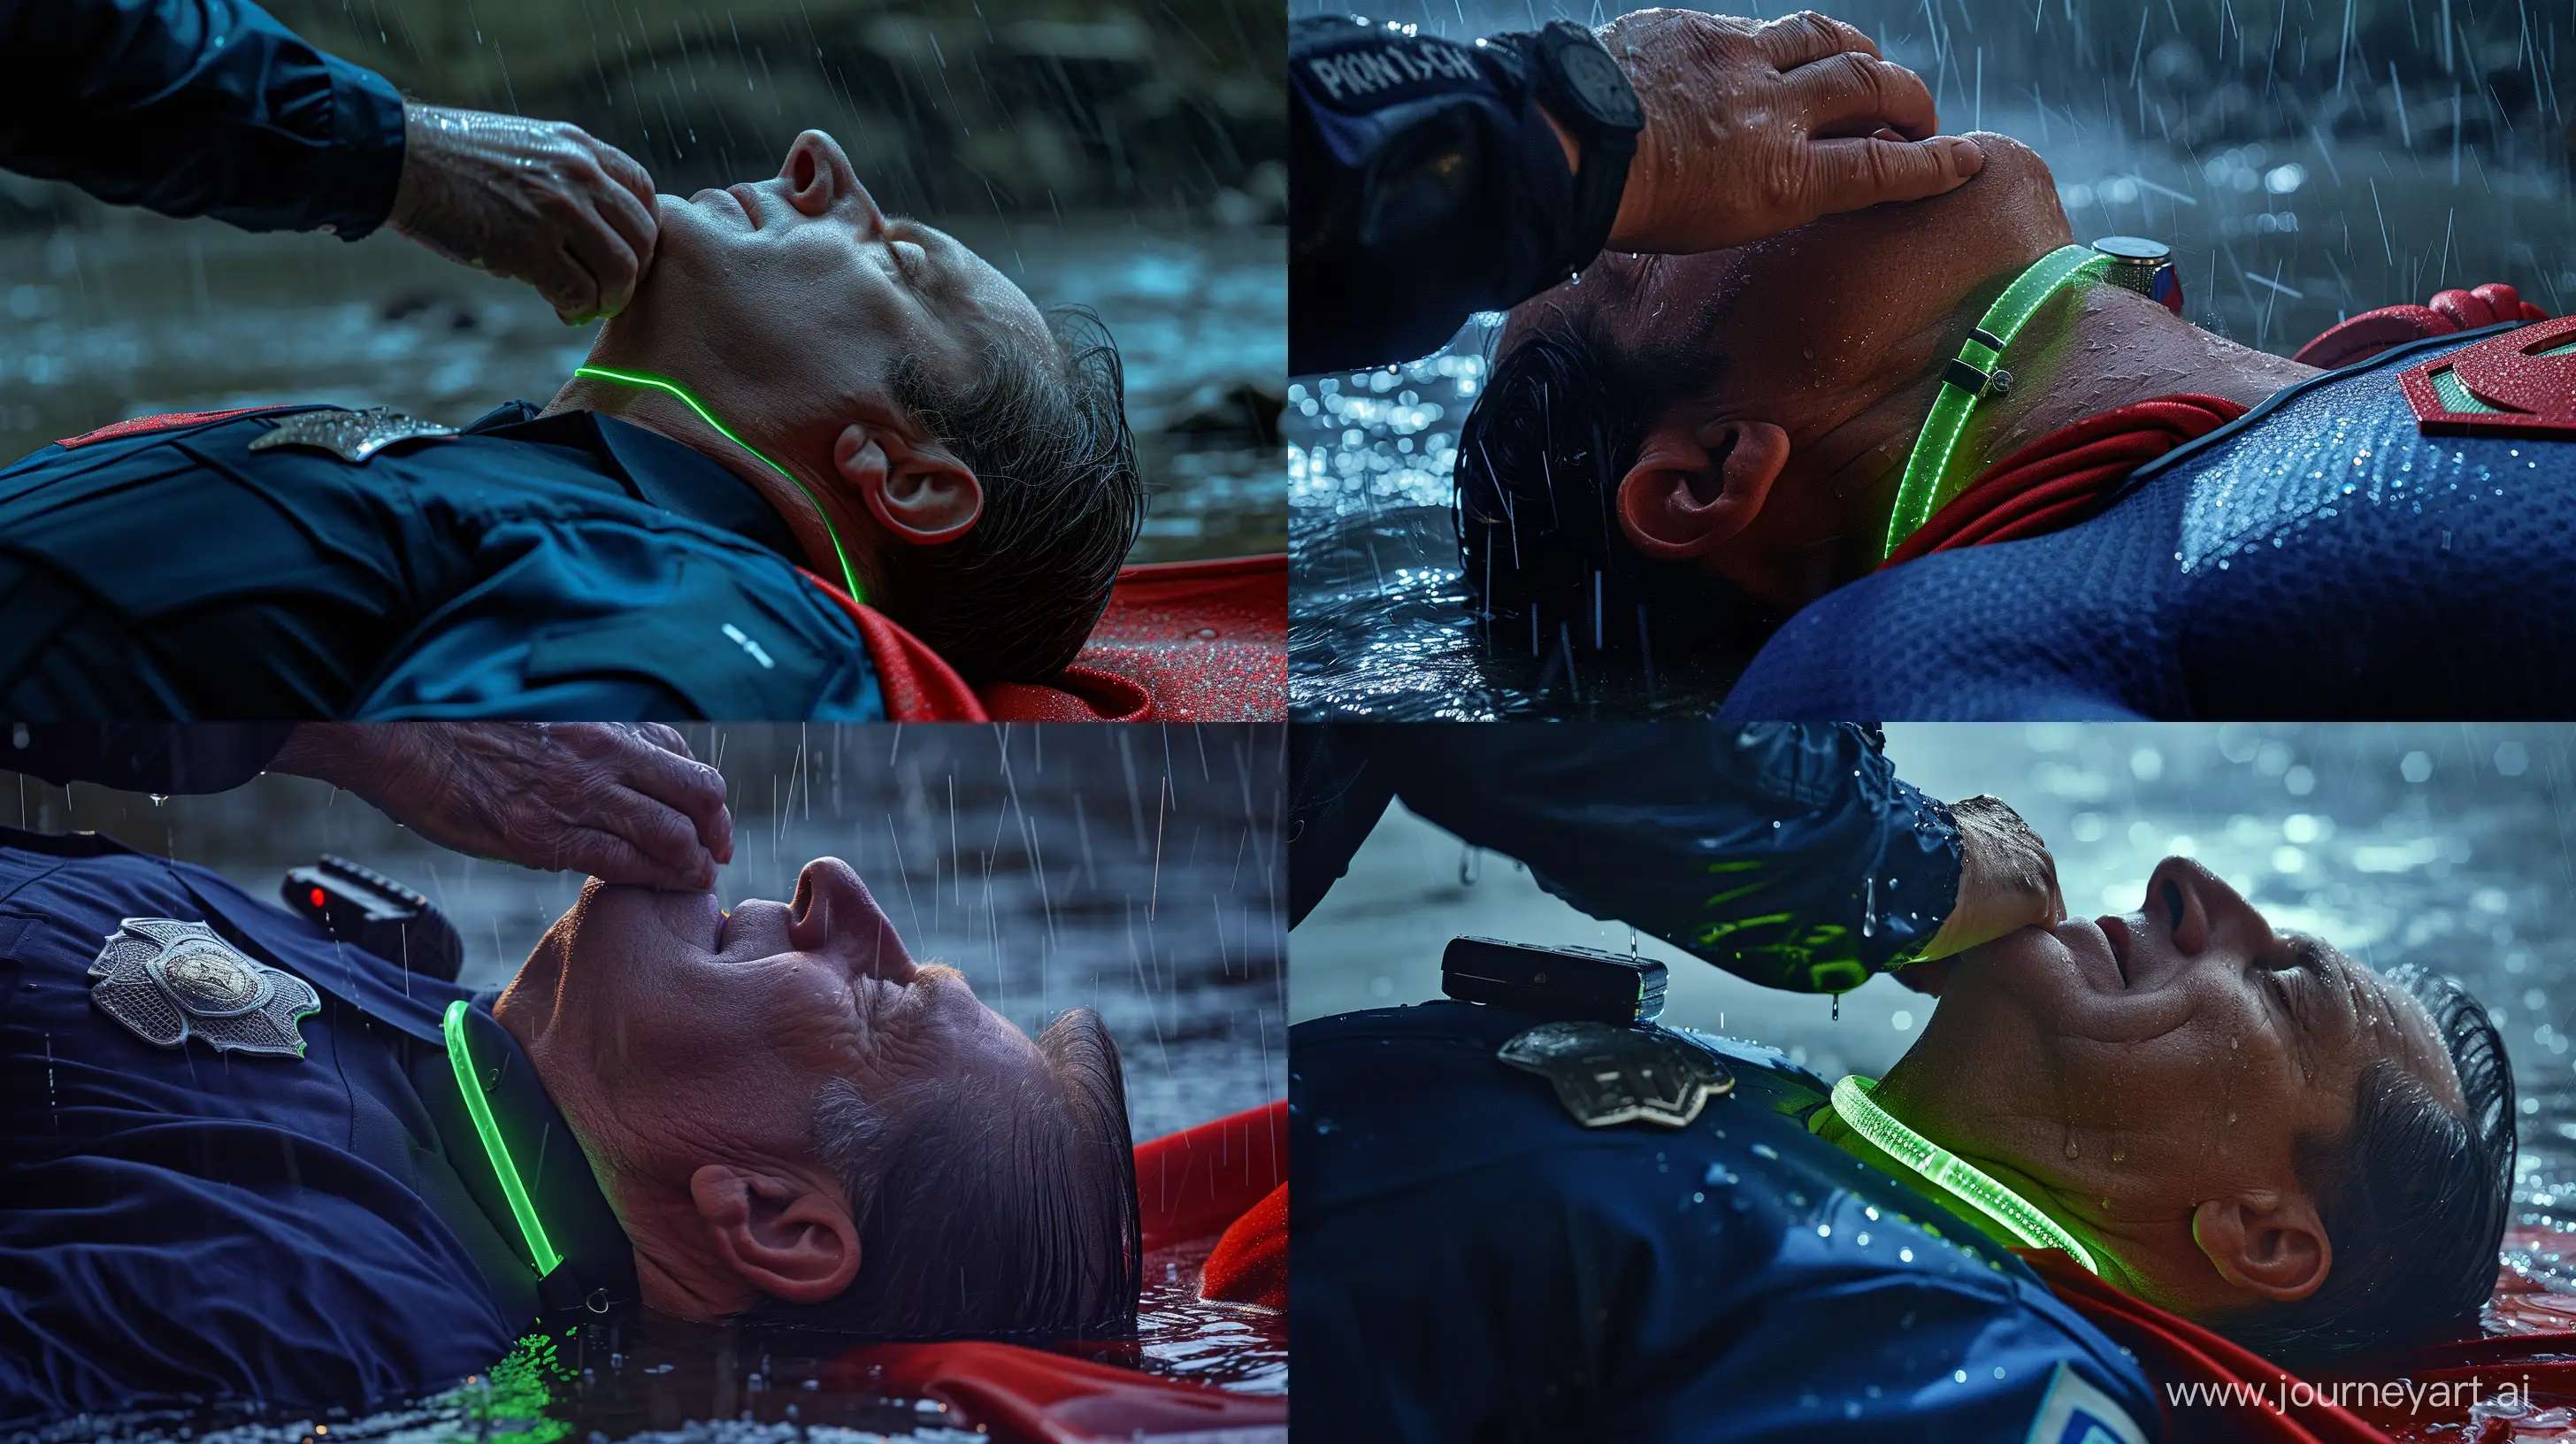 Elderly-Superman-Receives-Unusual-Collar-in-Neonlit-Rain